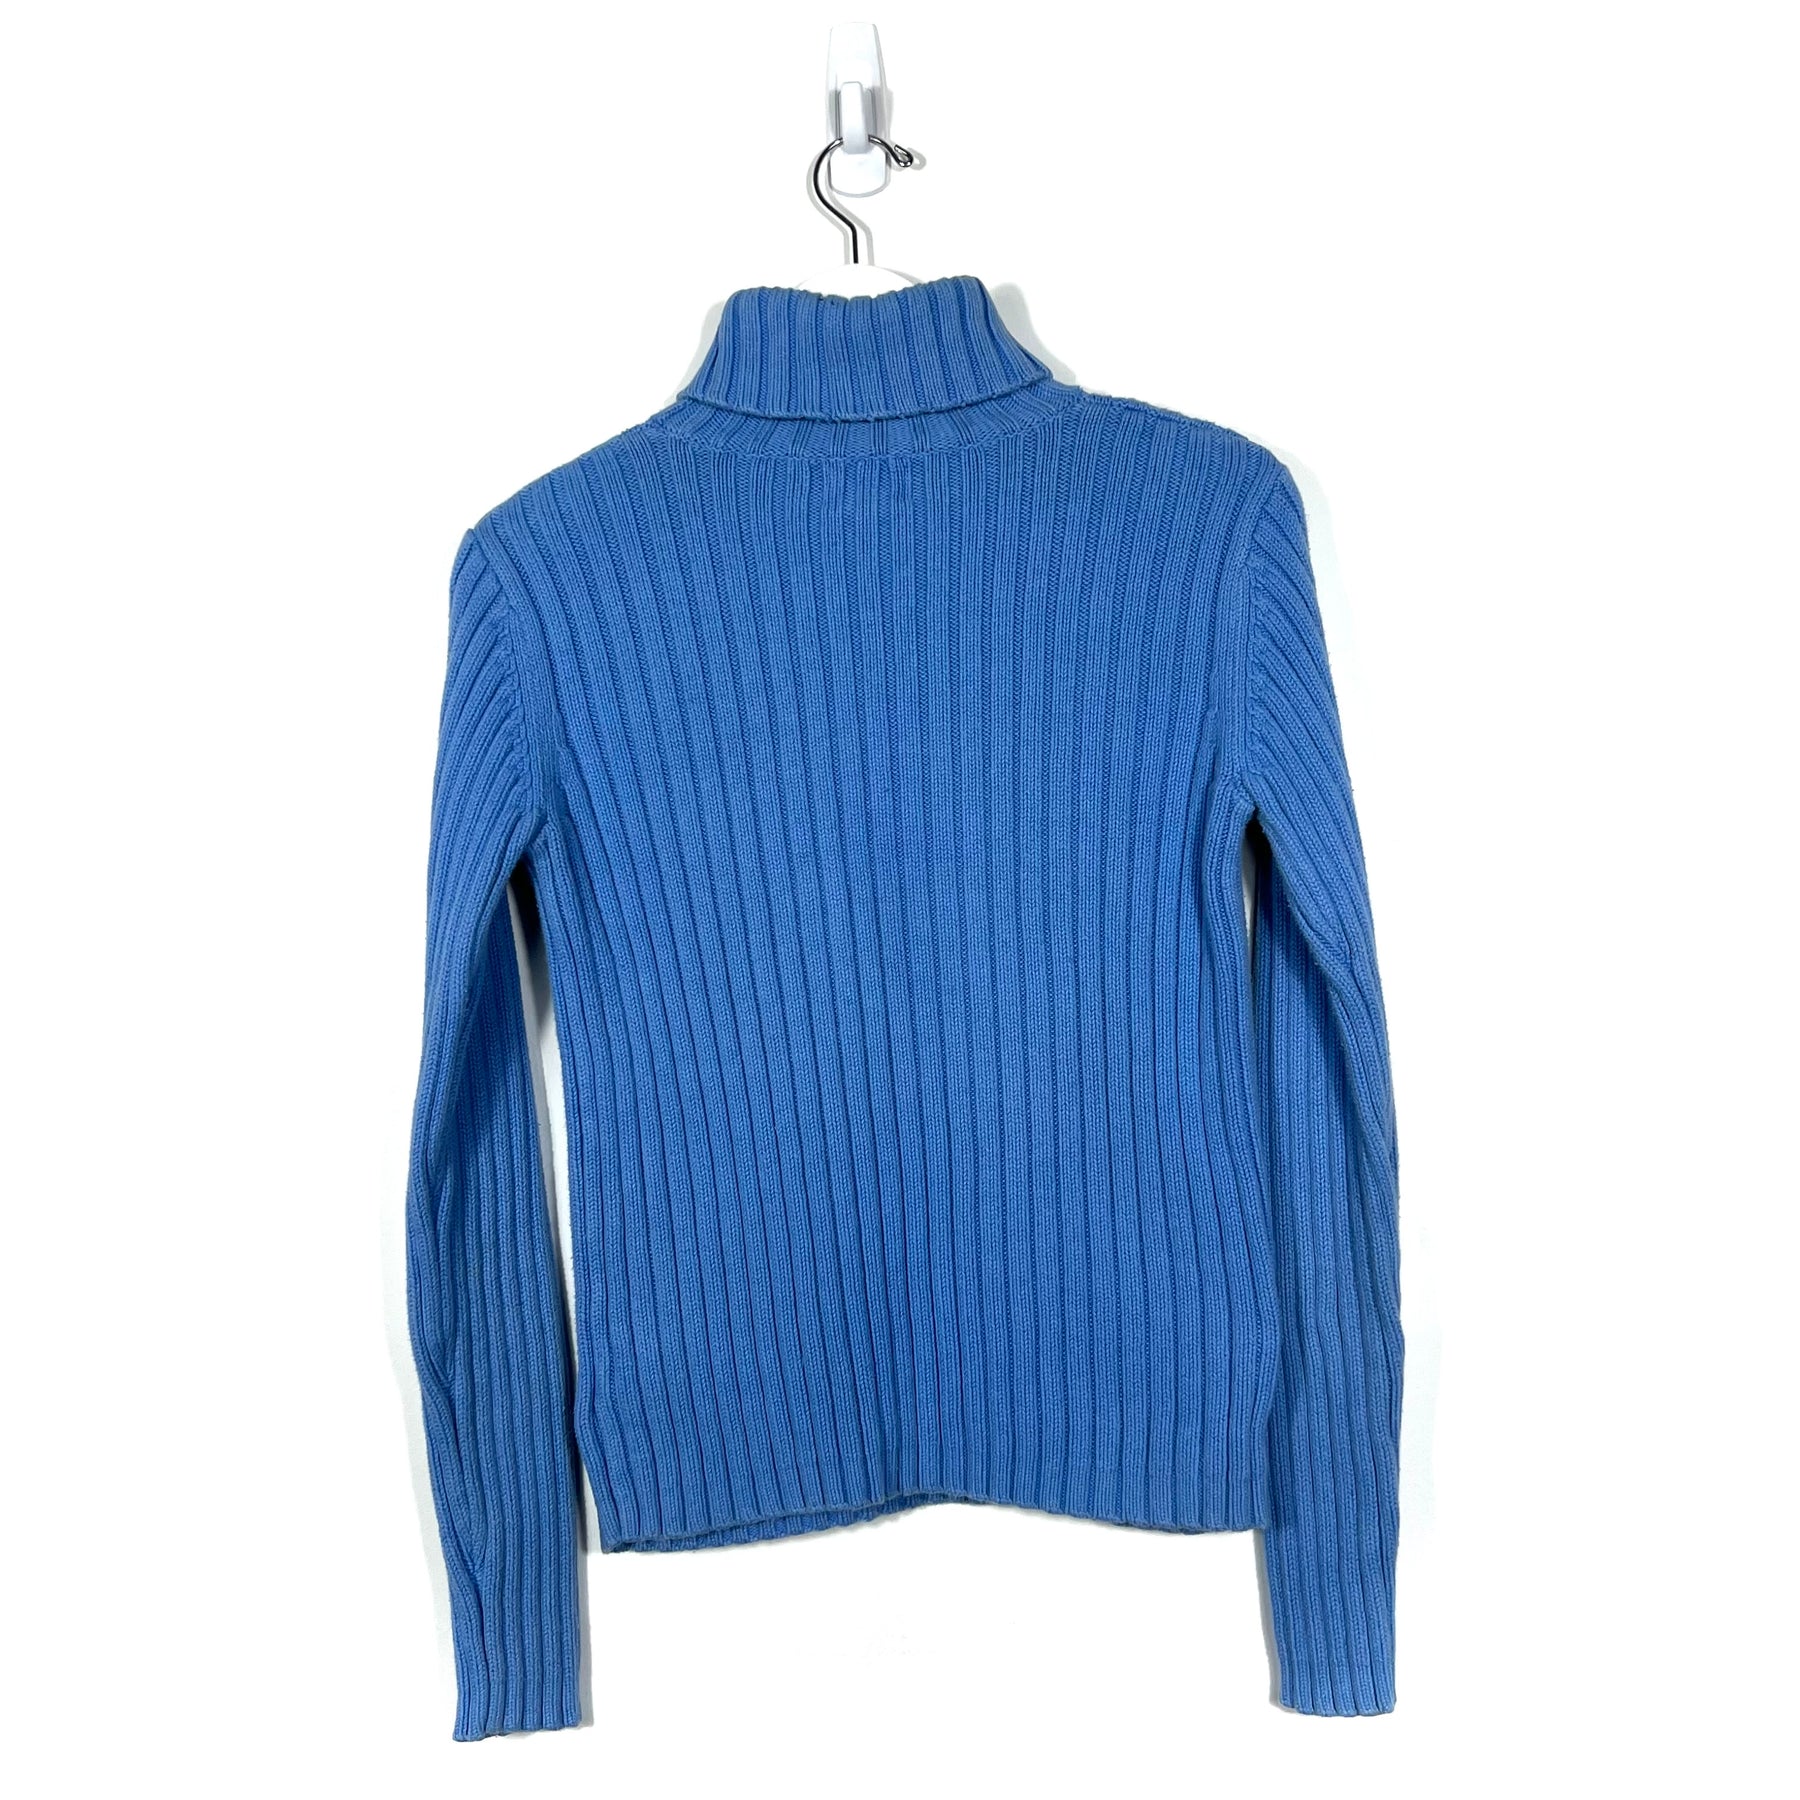 Vintage Nautica Sweater - Women's Medium